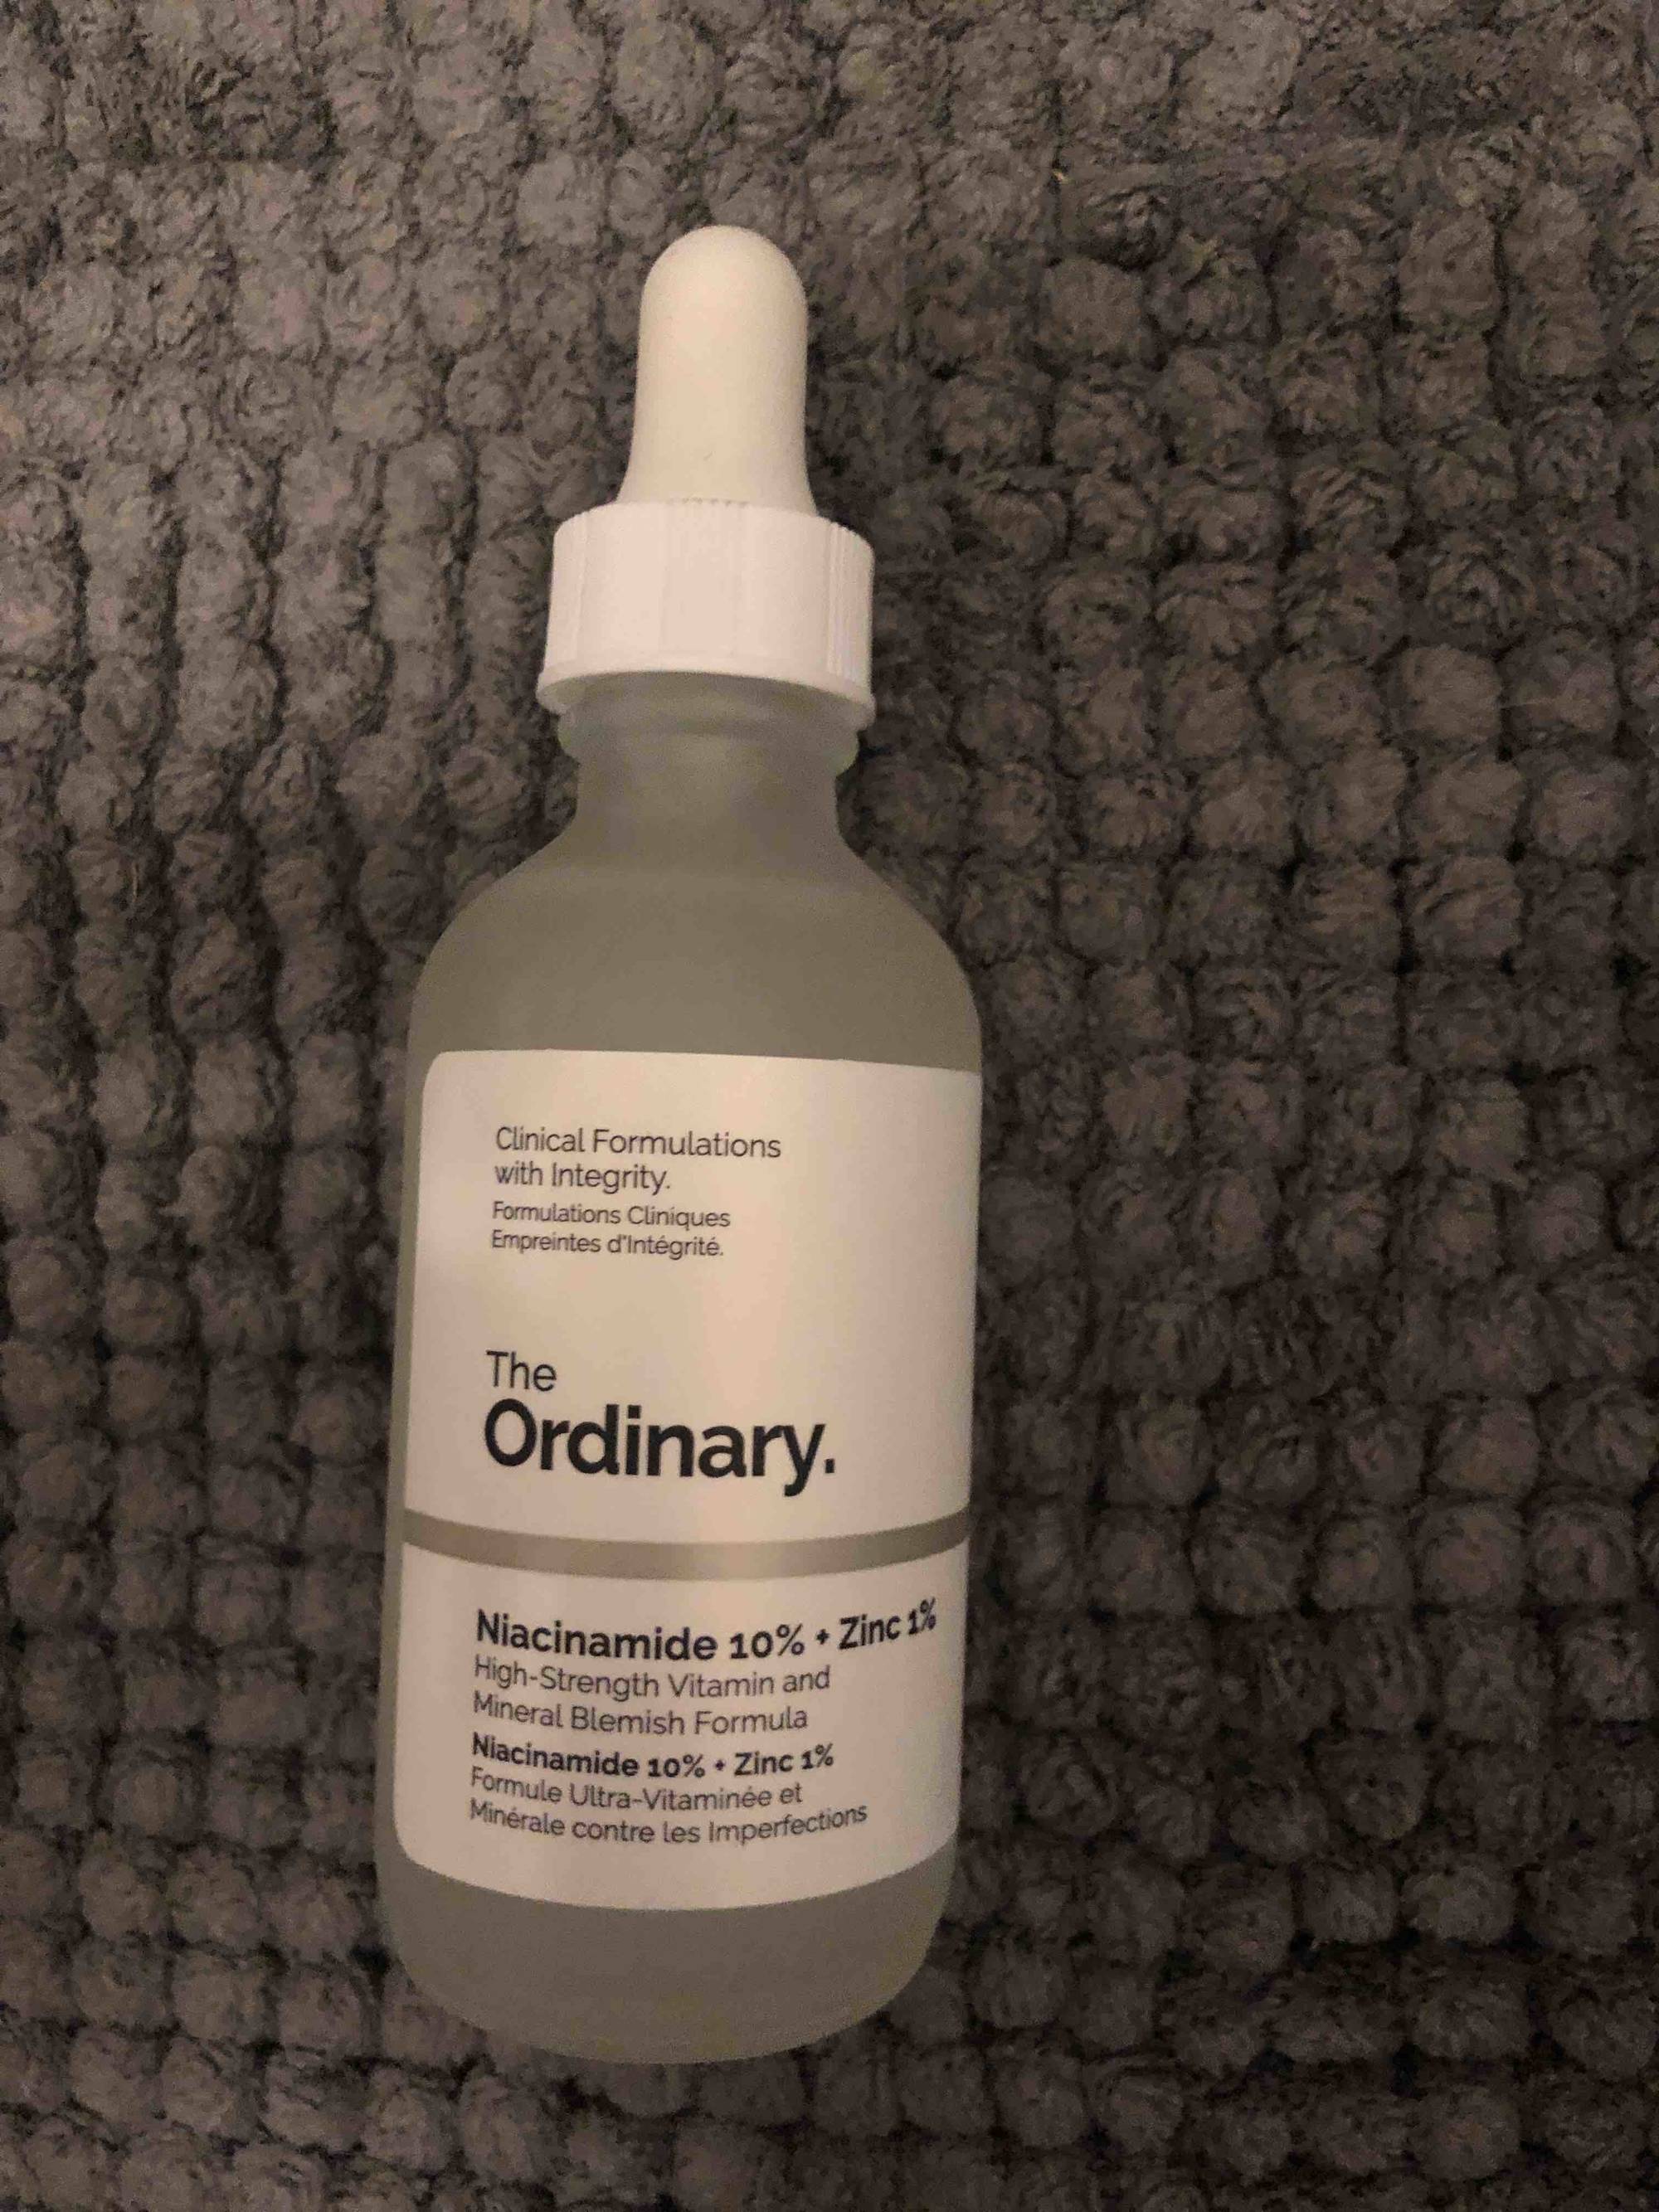 THE ORDINARY - Niacinamide 10%, zinc 1%